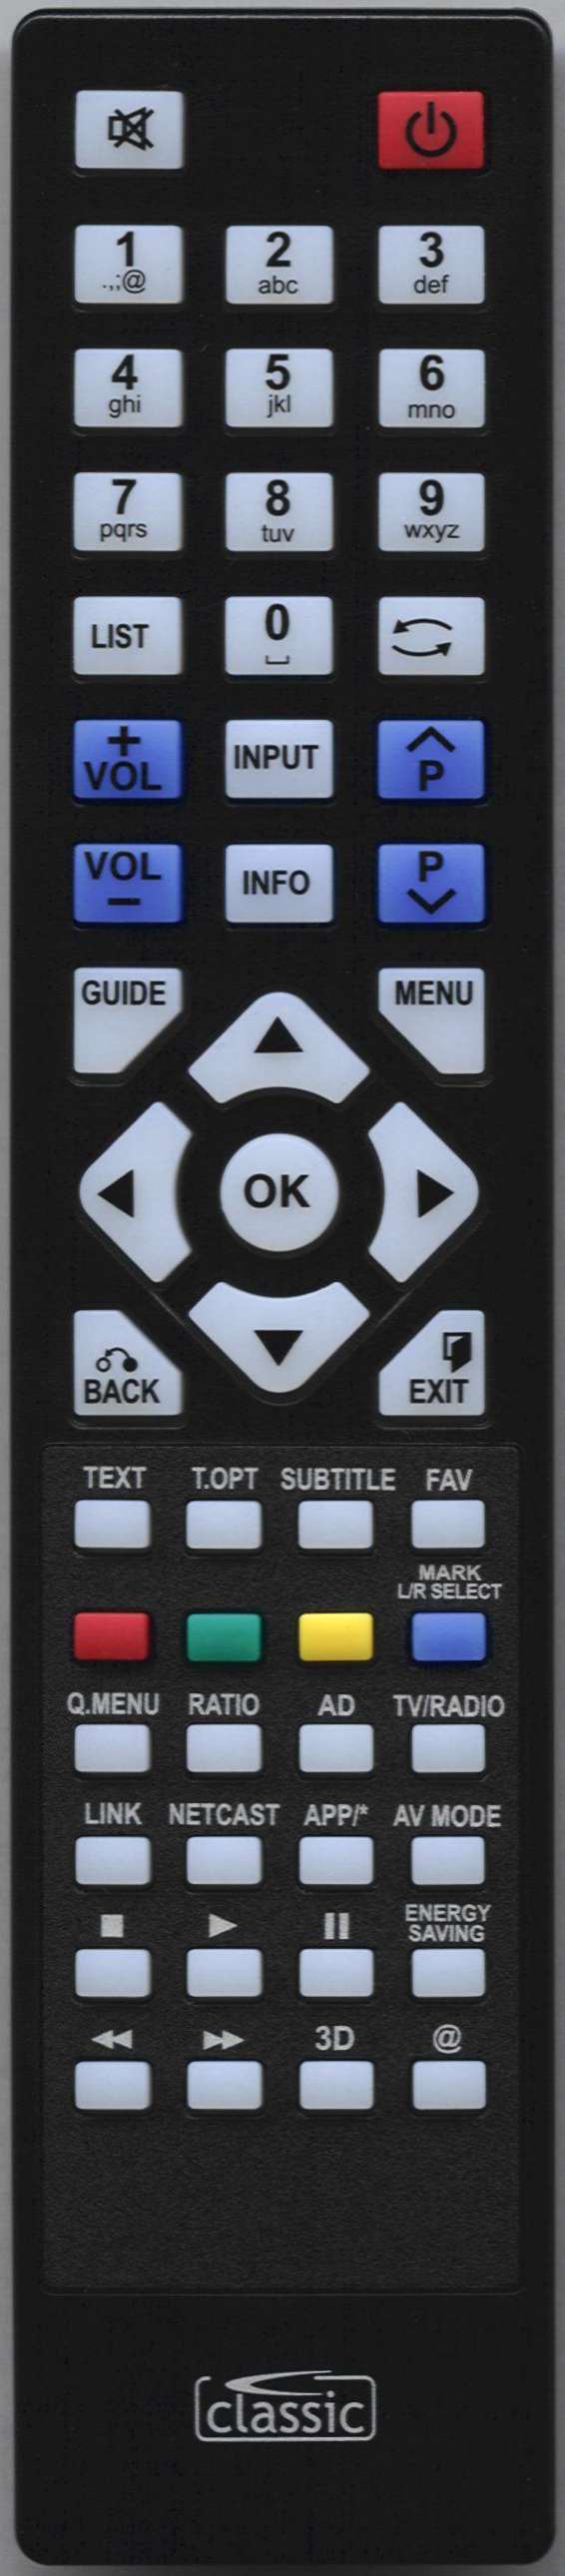 LG 47LD690 Remote Control Alternative